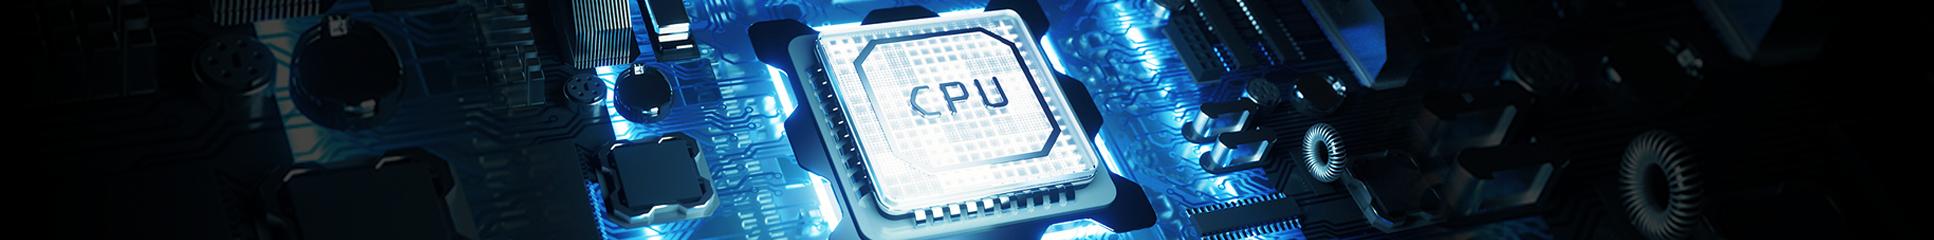 Wholesale CPU Processor Distributor,Supplier,Manufacturer,Company - E-ENERGY